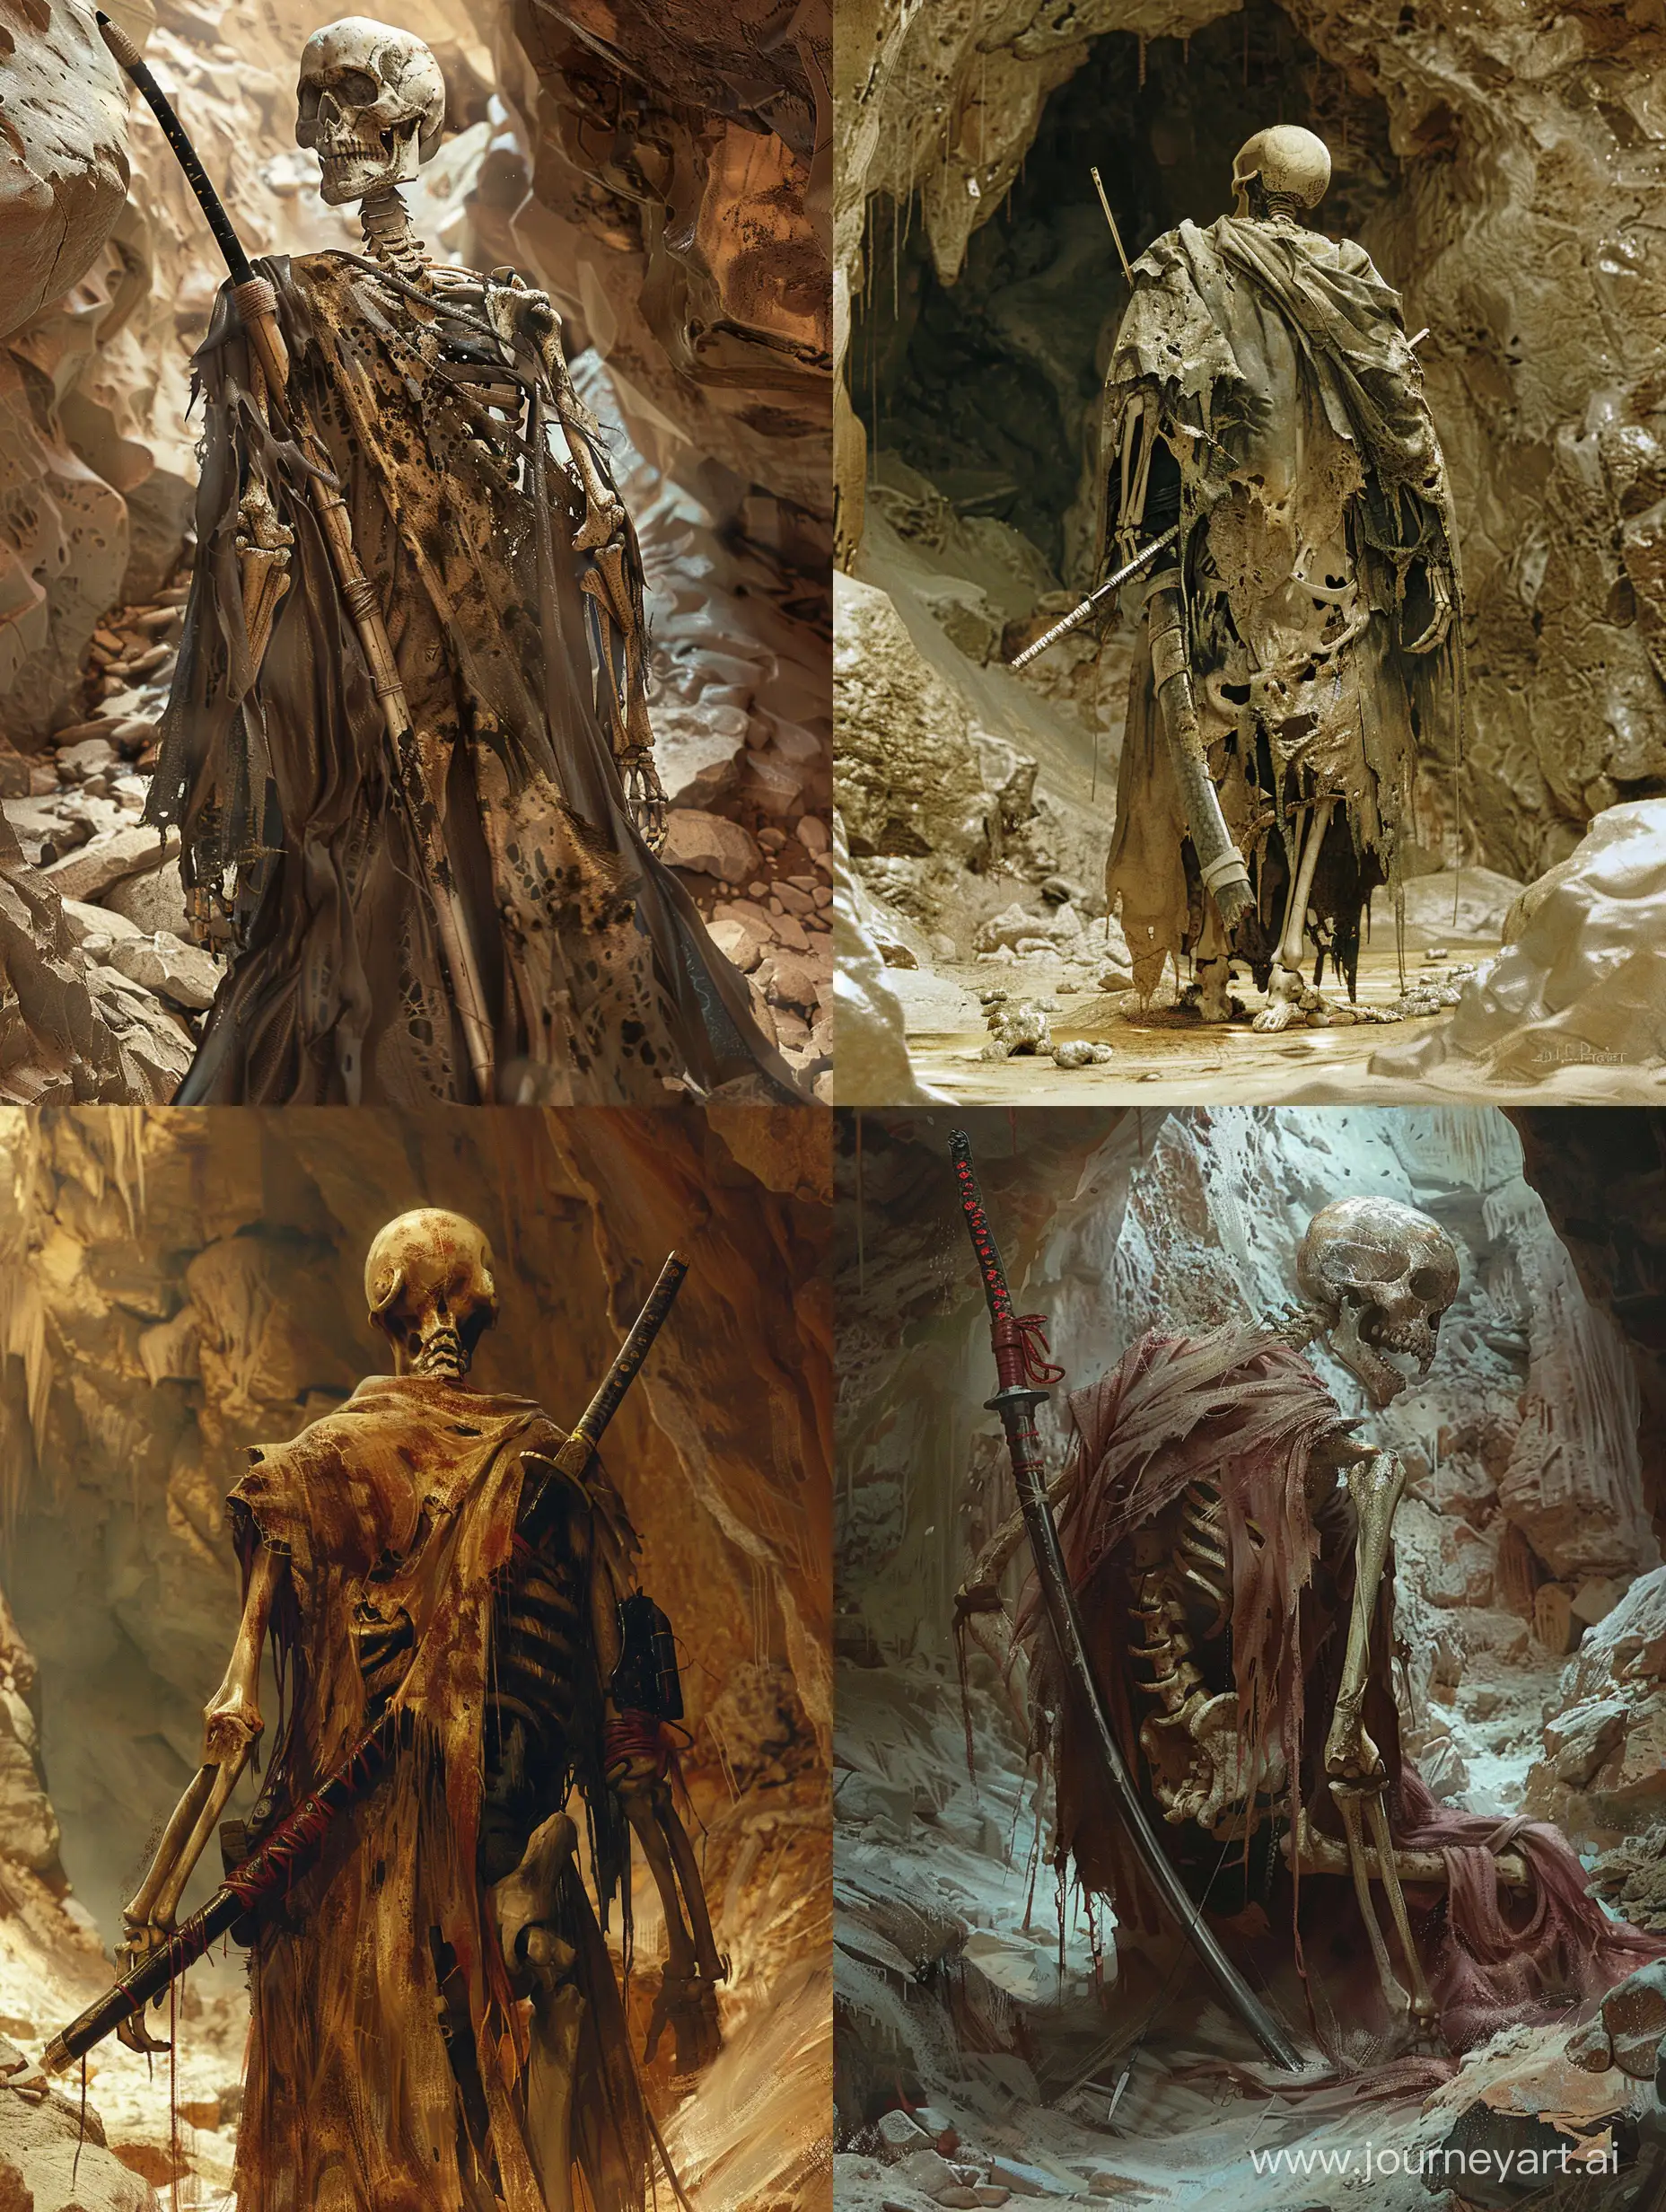 Terrifying-Skeleton-Warrior-with-Naginata-in-Underground-Cave-Detailed-Digital-Art